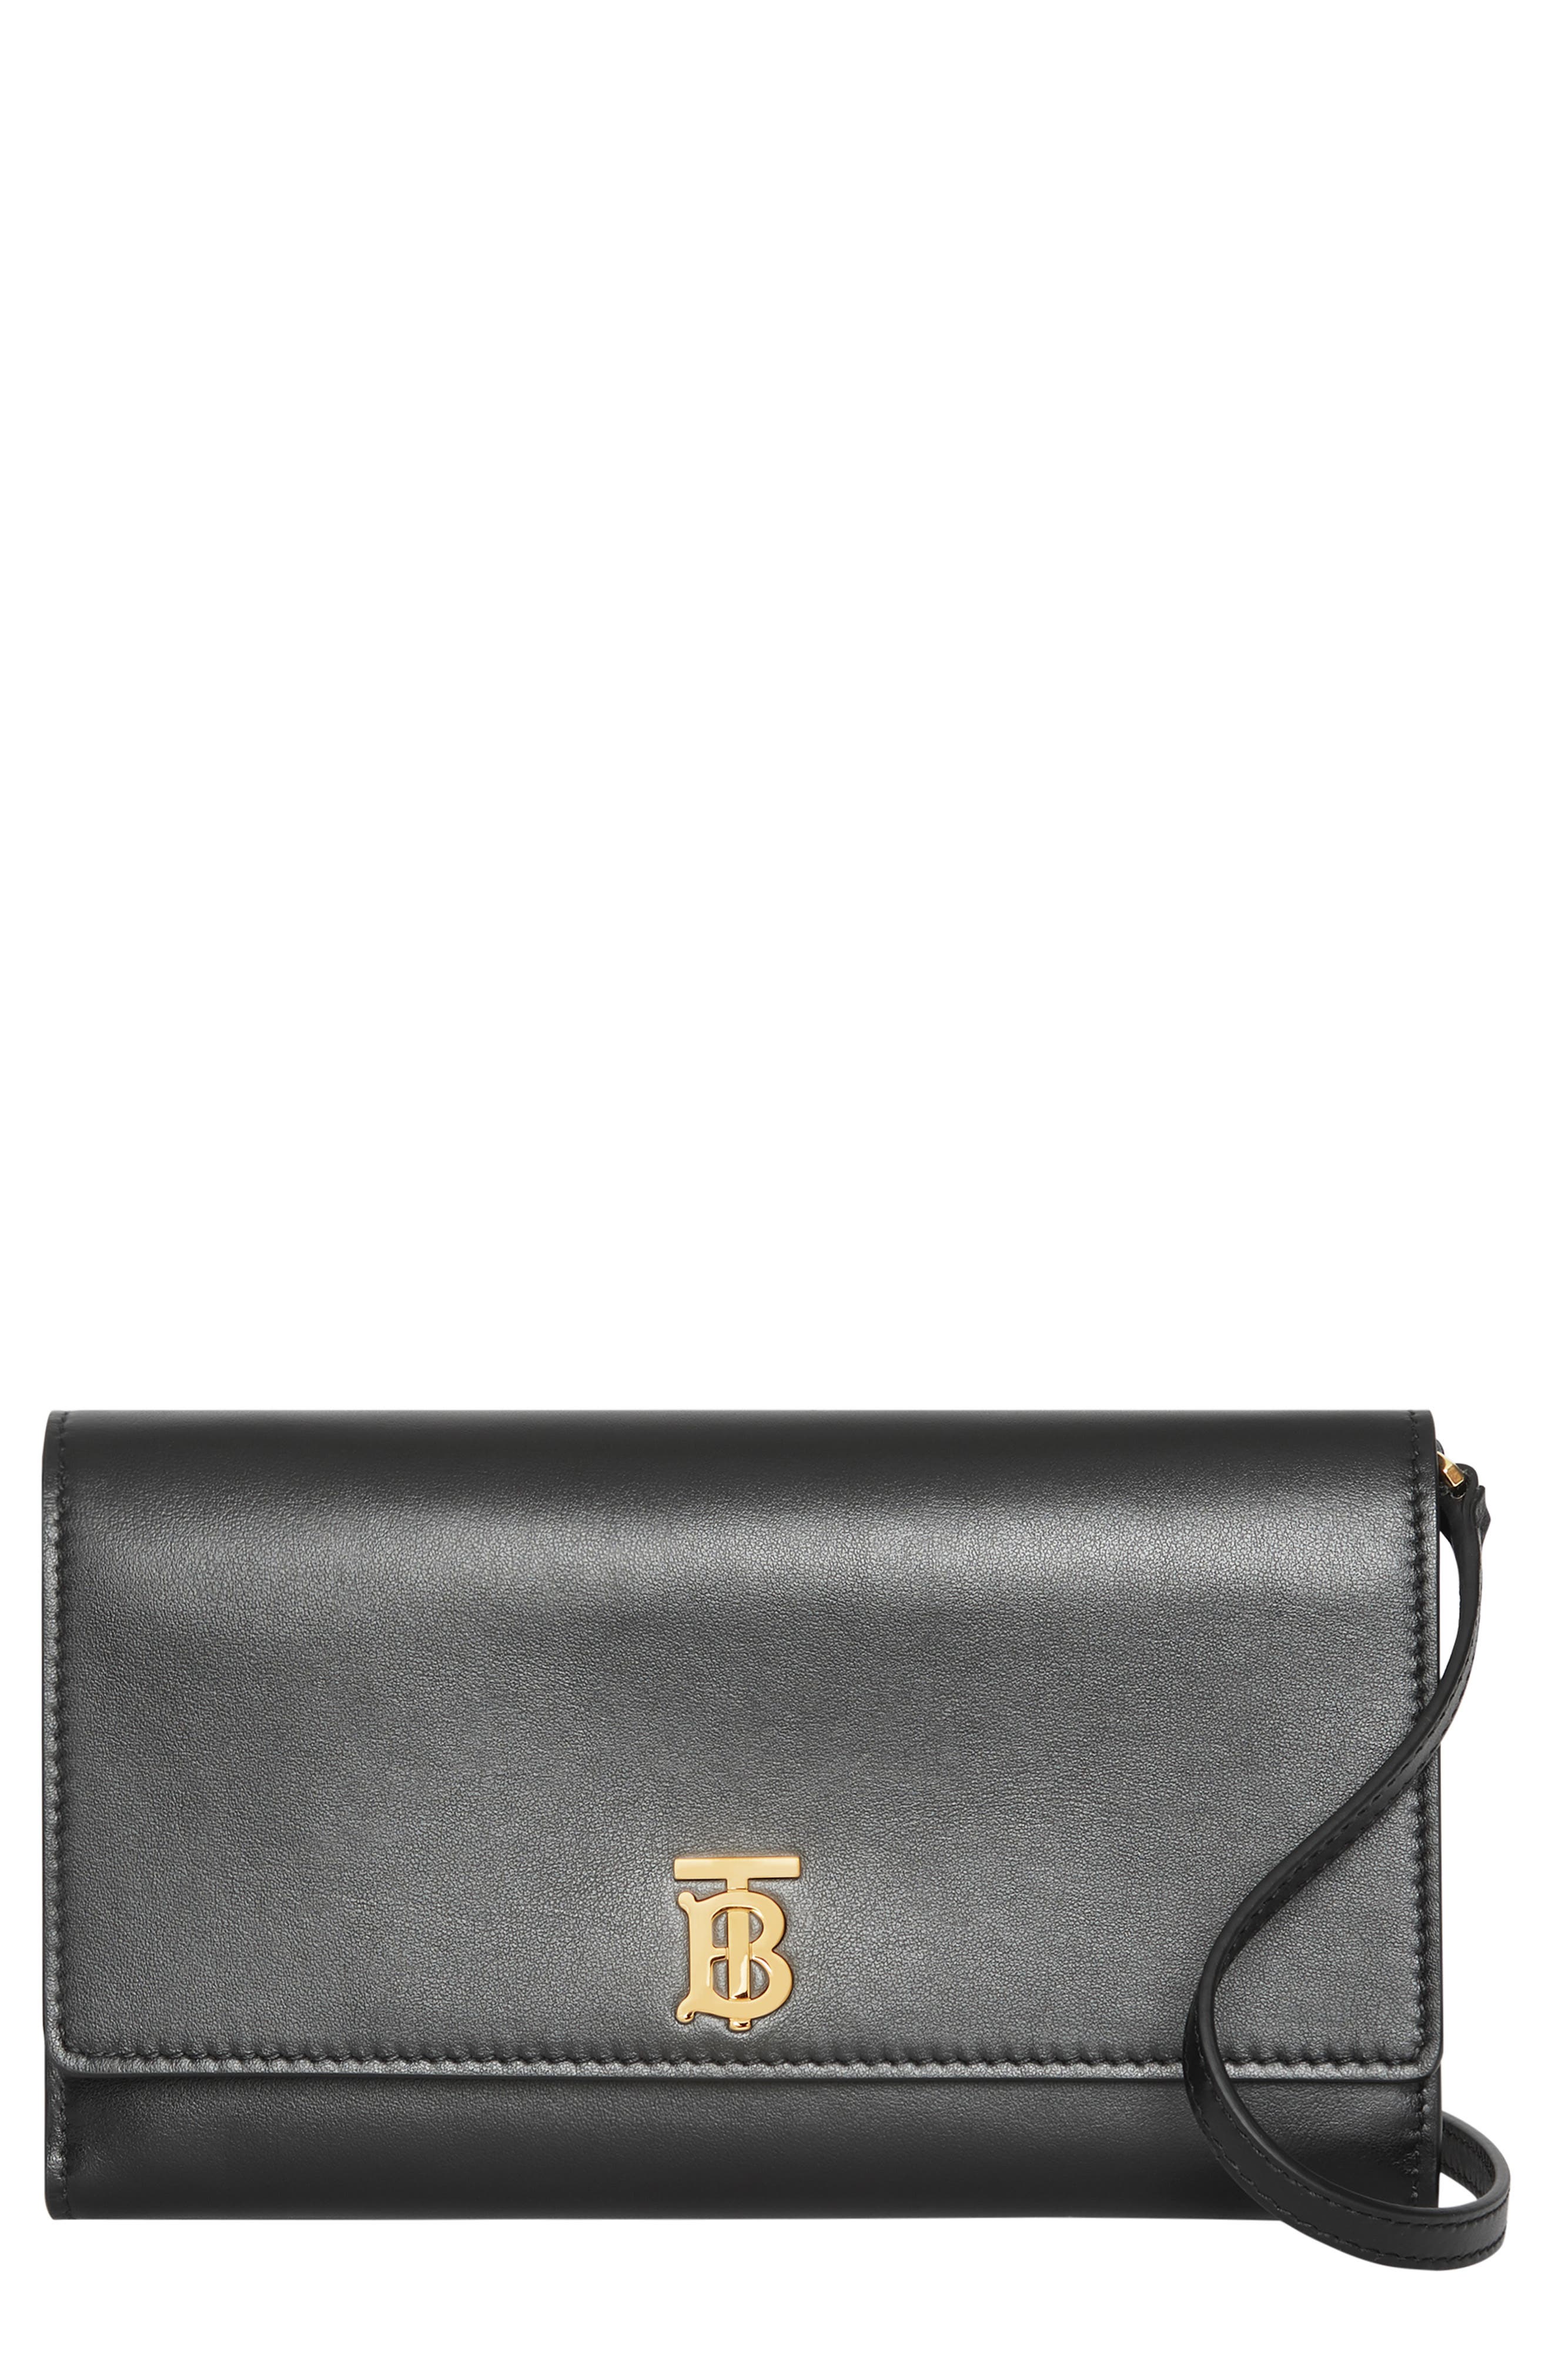 burberry purse brand